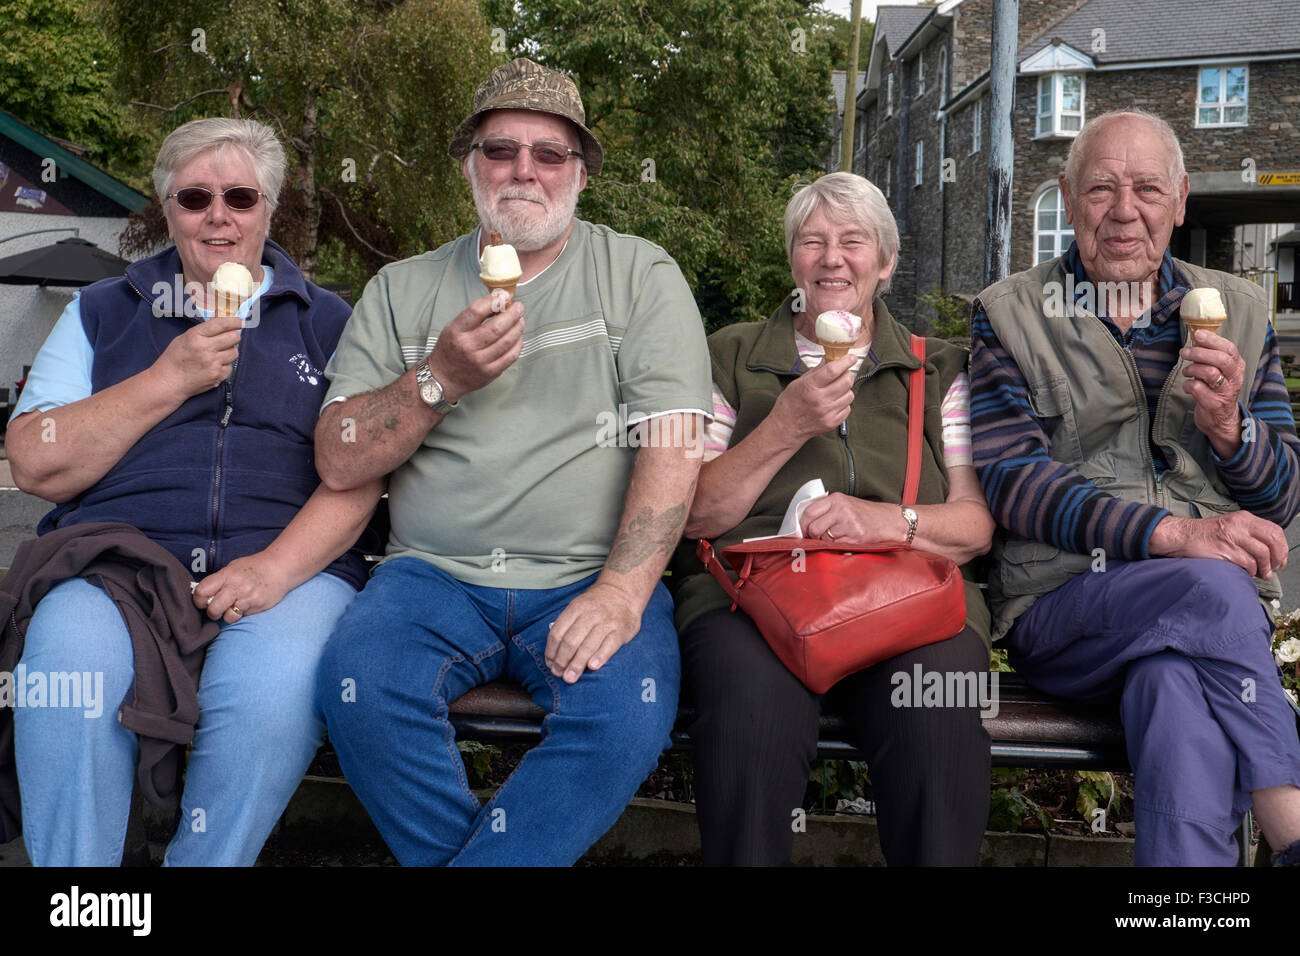 Eating ice cream. Senior people enjoying an ice cream on a days outing. Cumbria England UK Stock Photo